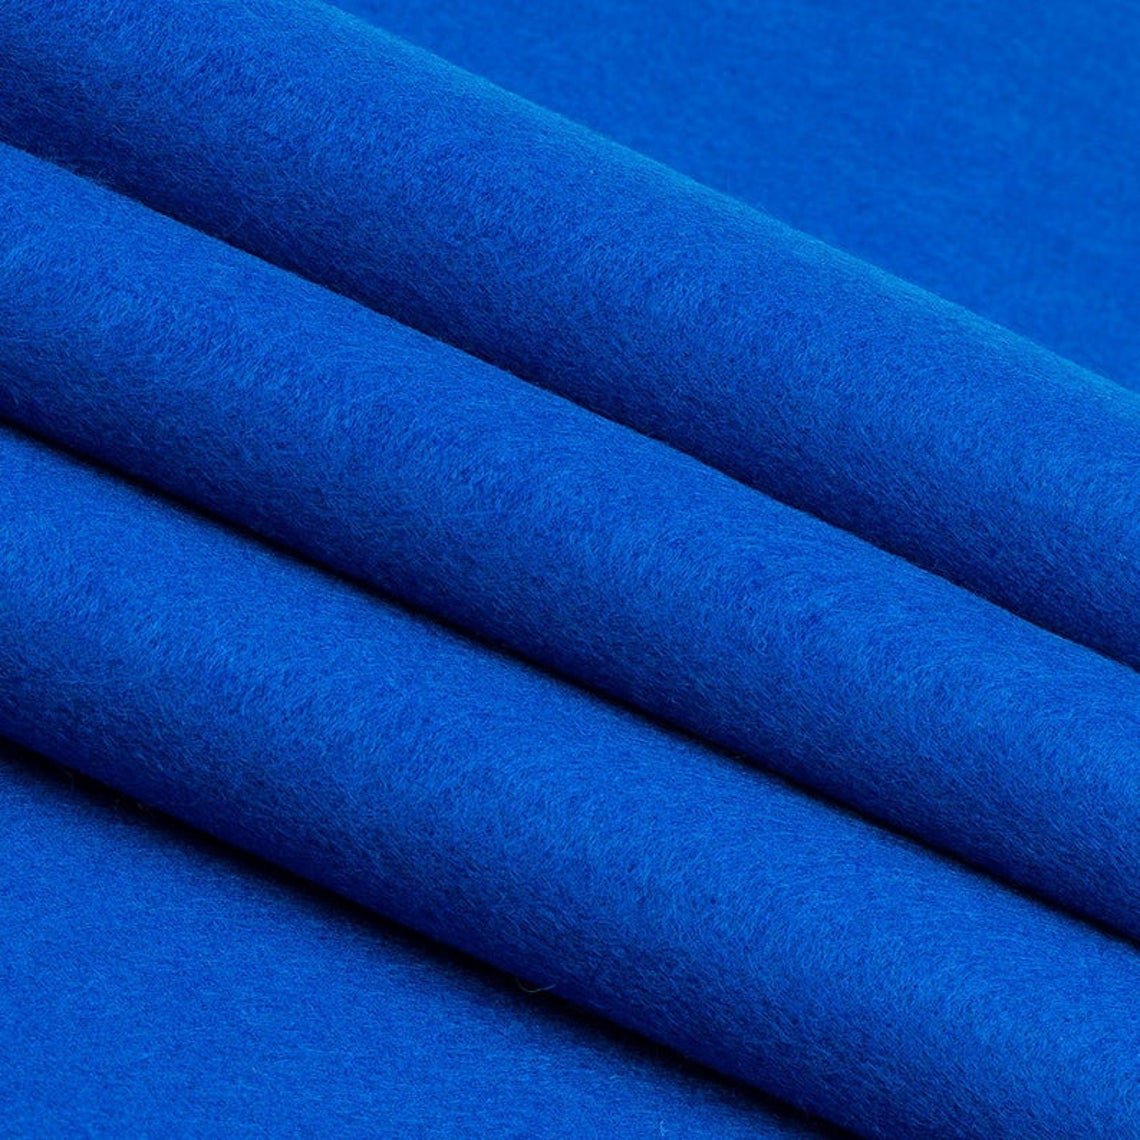 72" Wide 1.6 mm Thick Acrylic Royal Blue Felt Fabric By The YardICE FABRICSICE FABRICSPer Yard1.6mm Thick72" Wide 1.6 mm Thick Acrylic Royal Blue Felt Fabric By The Yard ICE FABRICS